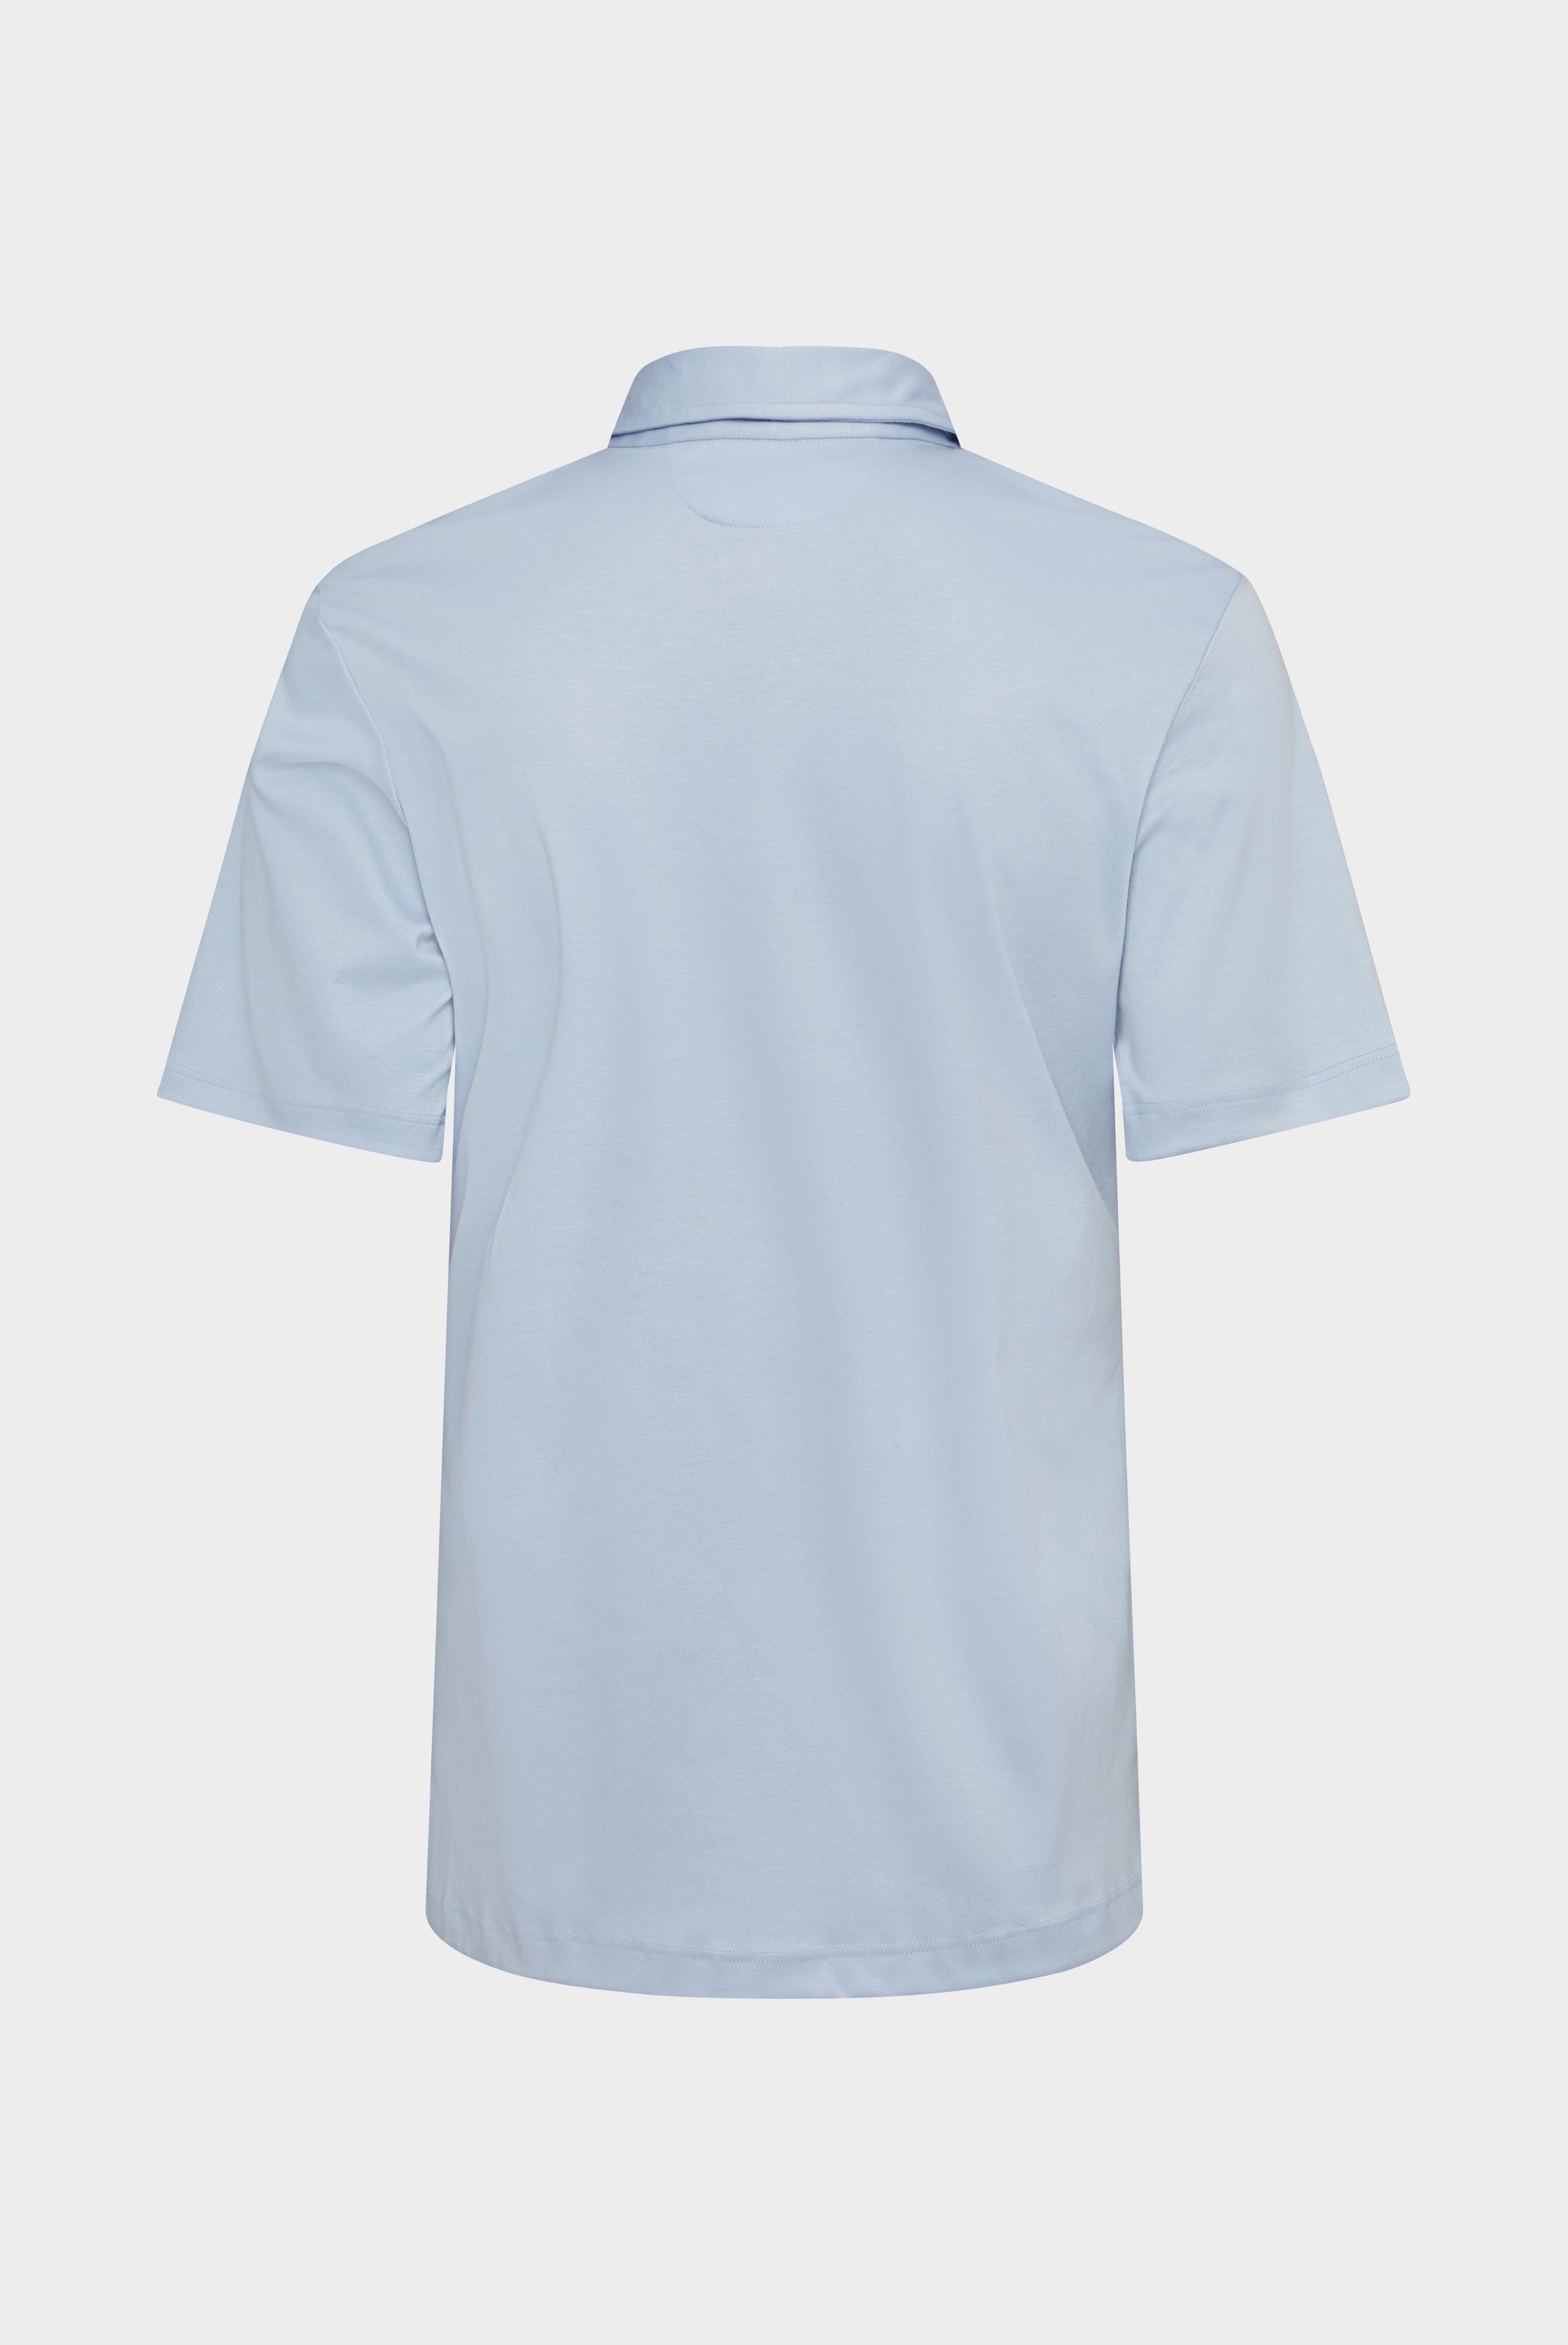 Tops & T-Shirts+Classic Swiss Cotton Polo Shirt+05.2523.07.180031.720.32